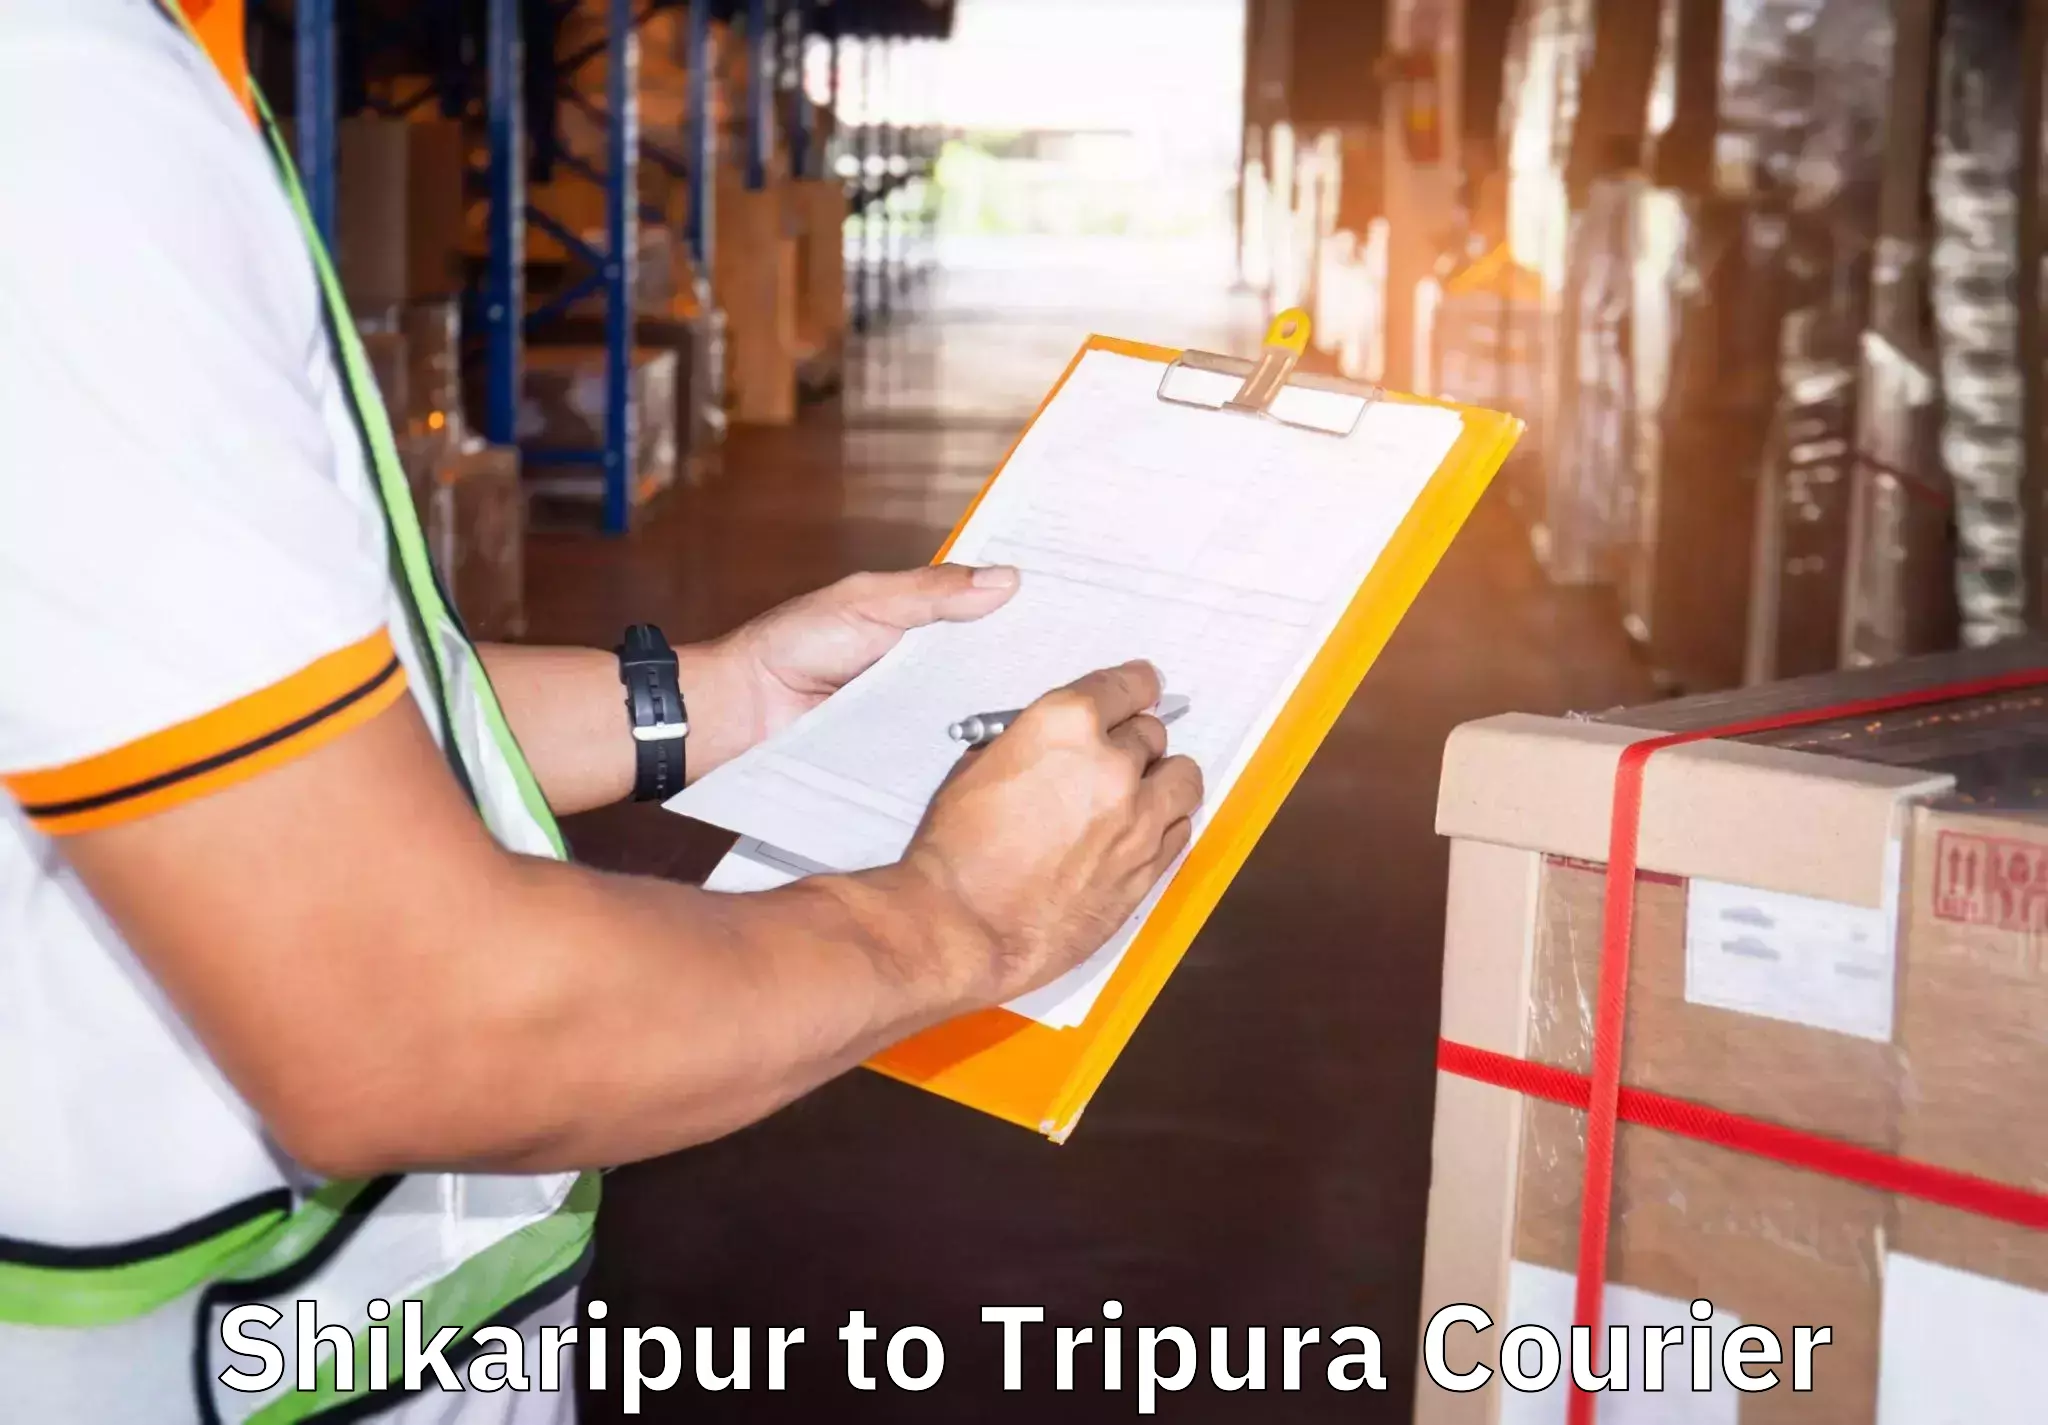 Full-service movers Shikaripur to Udaipur Tripura